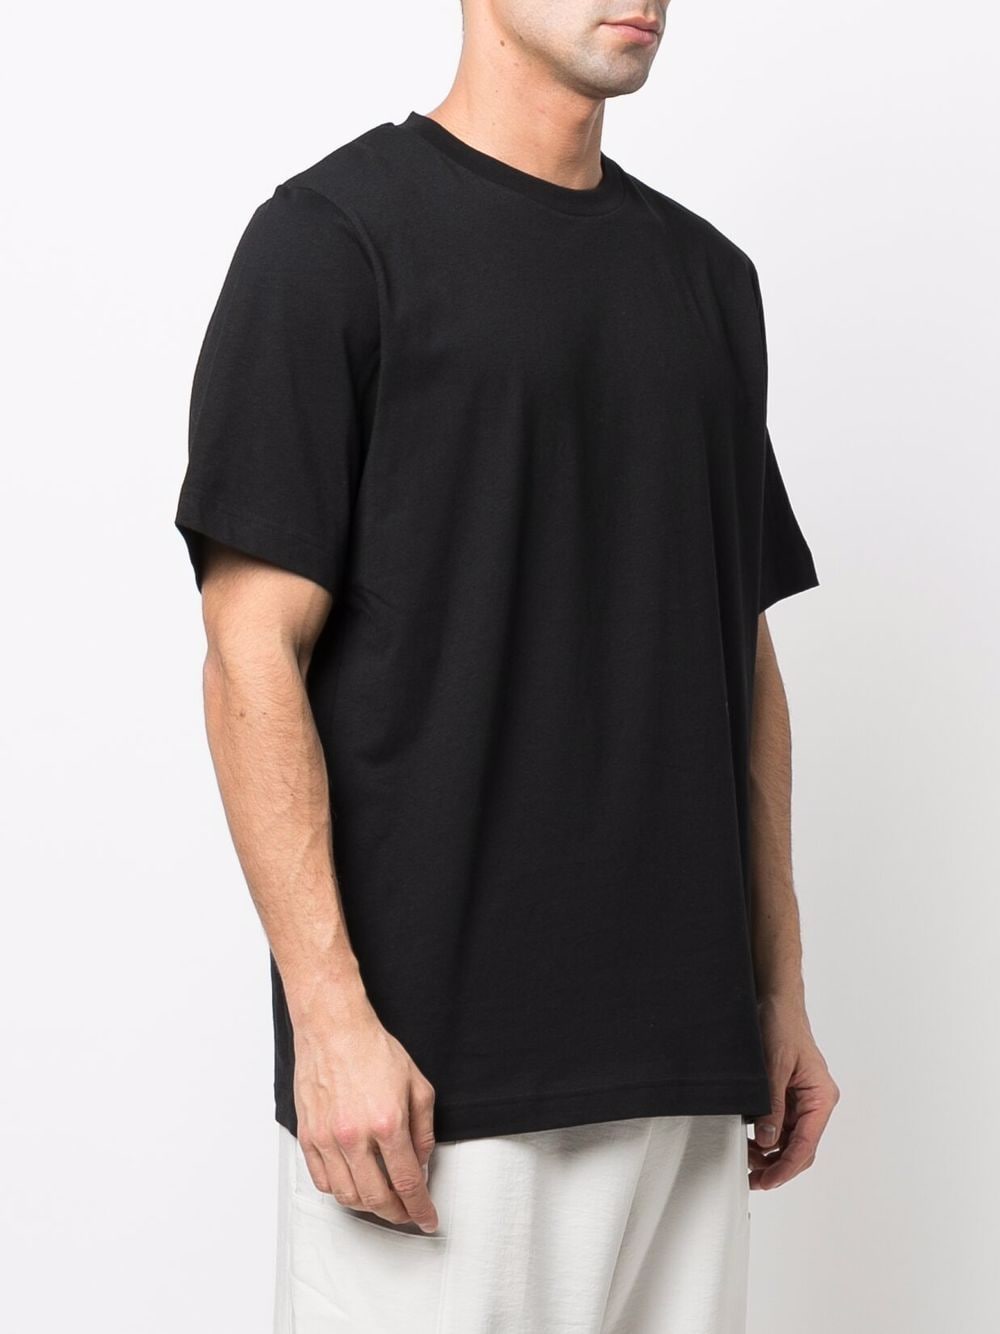 Index SS cotton T-Shirt